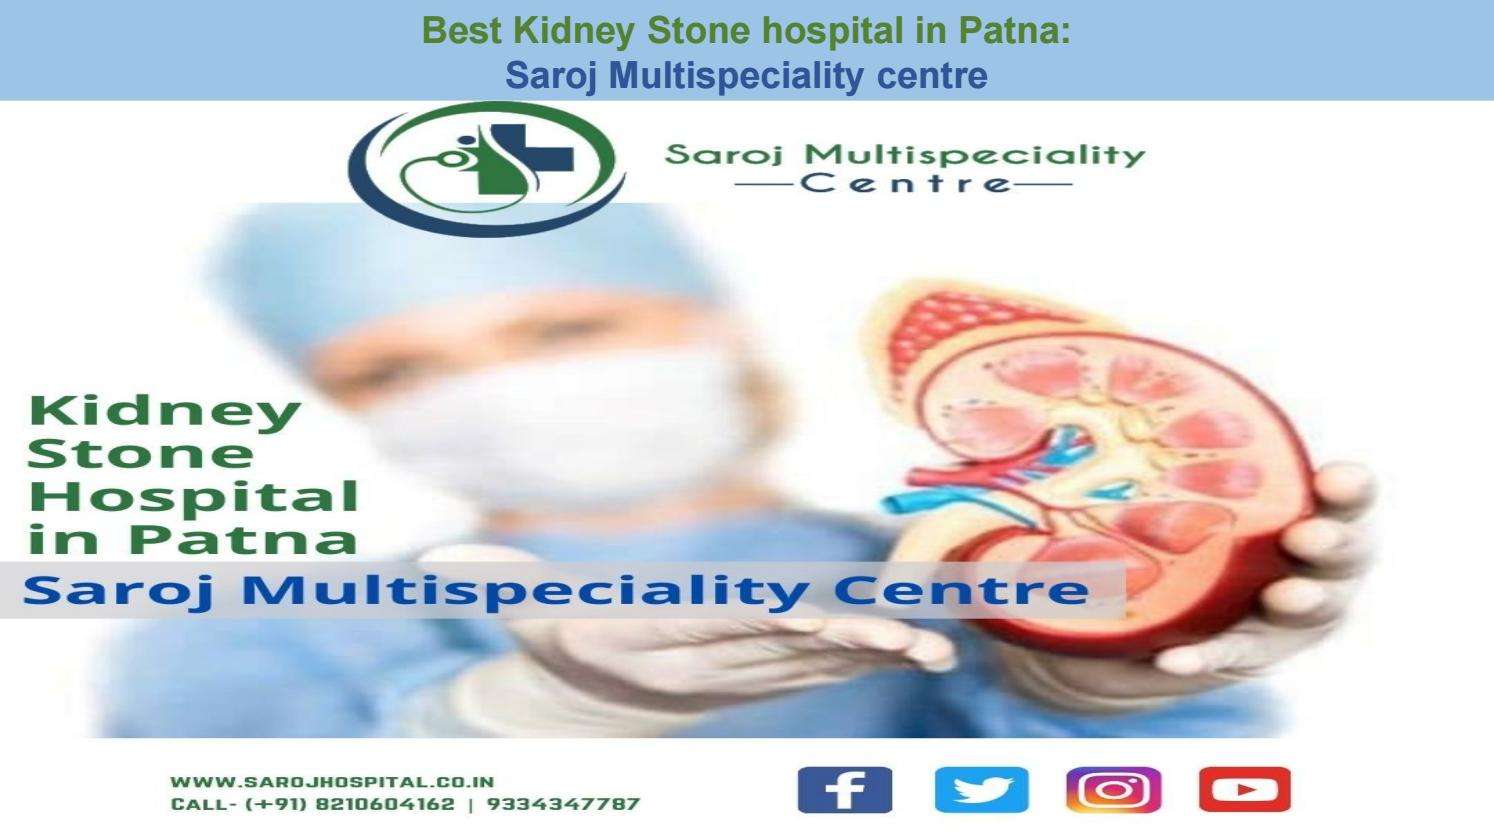 Best Kidney Stone hospital in Patna: Saroj Multispeciality centre by ...